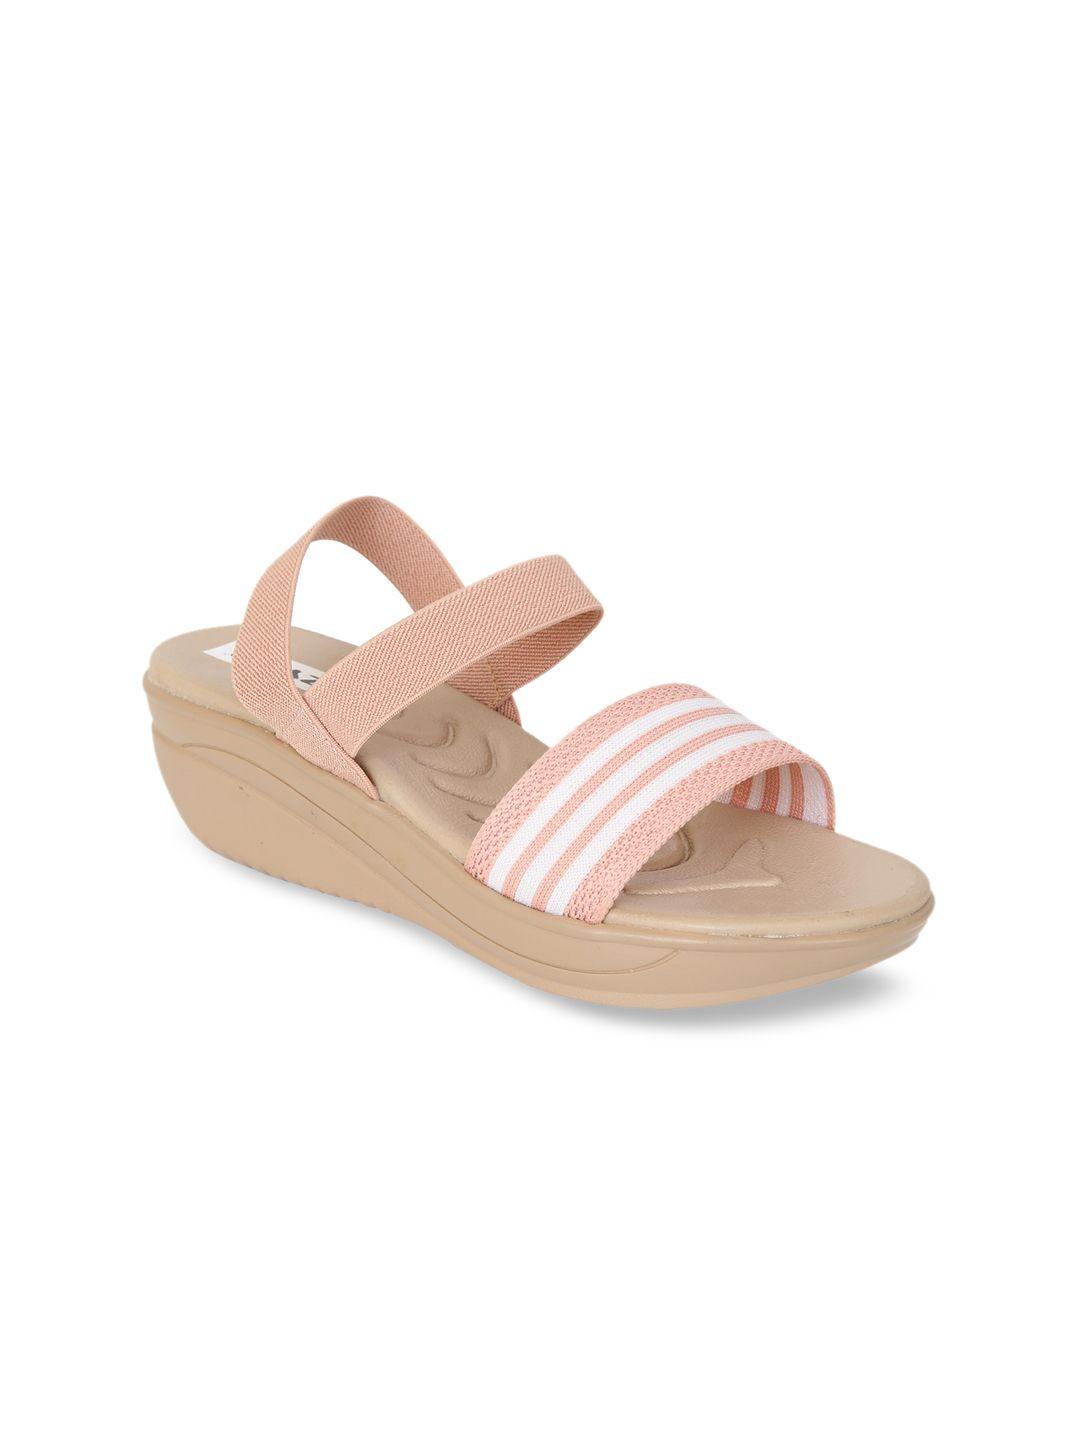 zyla-peach-&-white-wedge-sandals